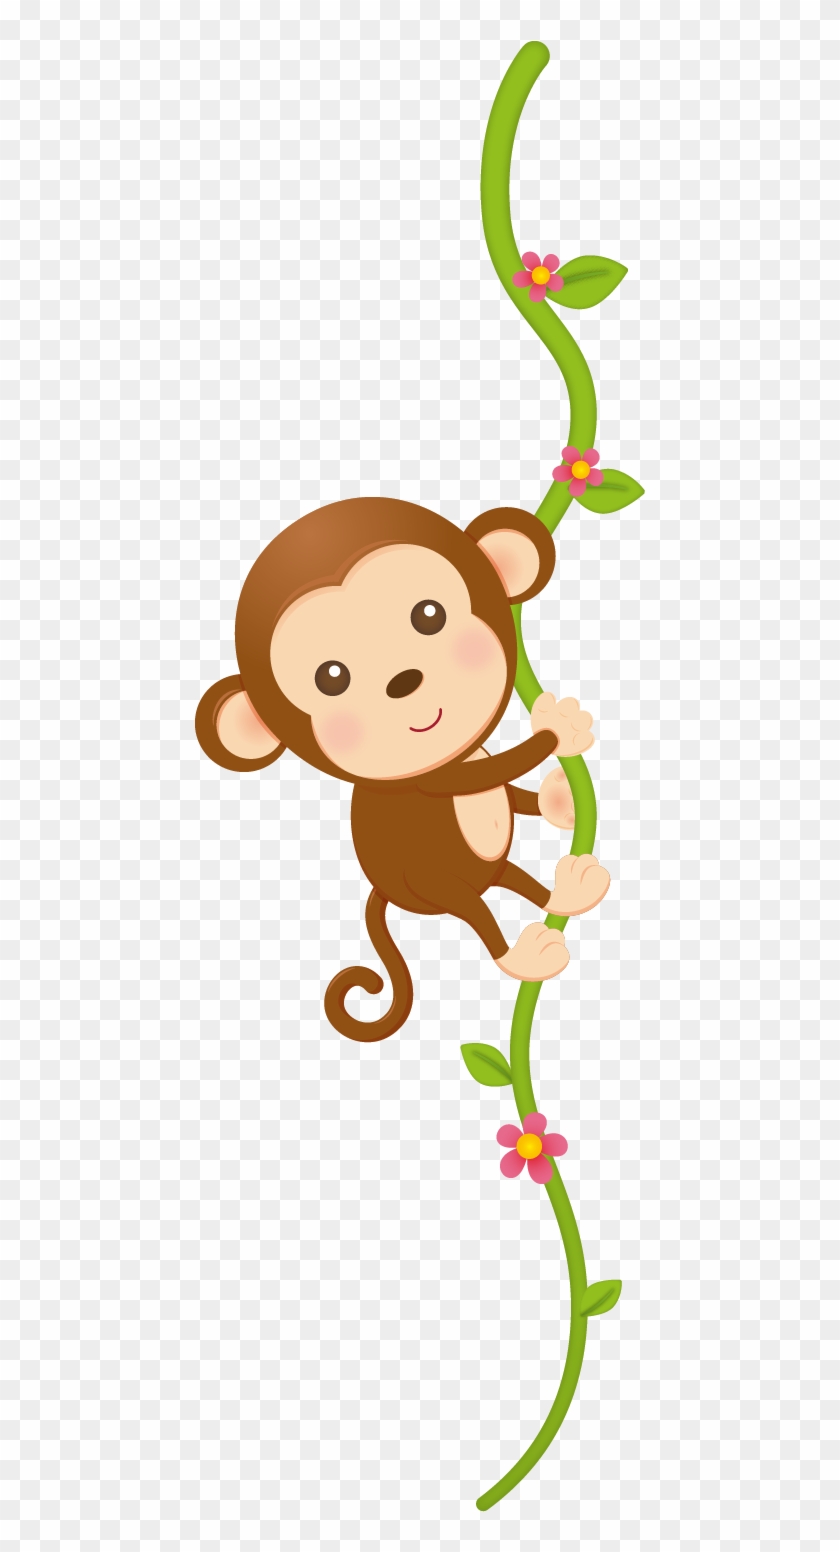 Animal Prints, Clip Art, Images, Rompers, Illustrations, - Monkey Clip Art For Kids #1026029